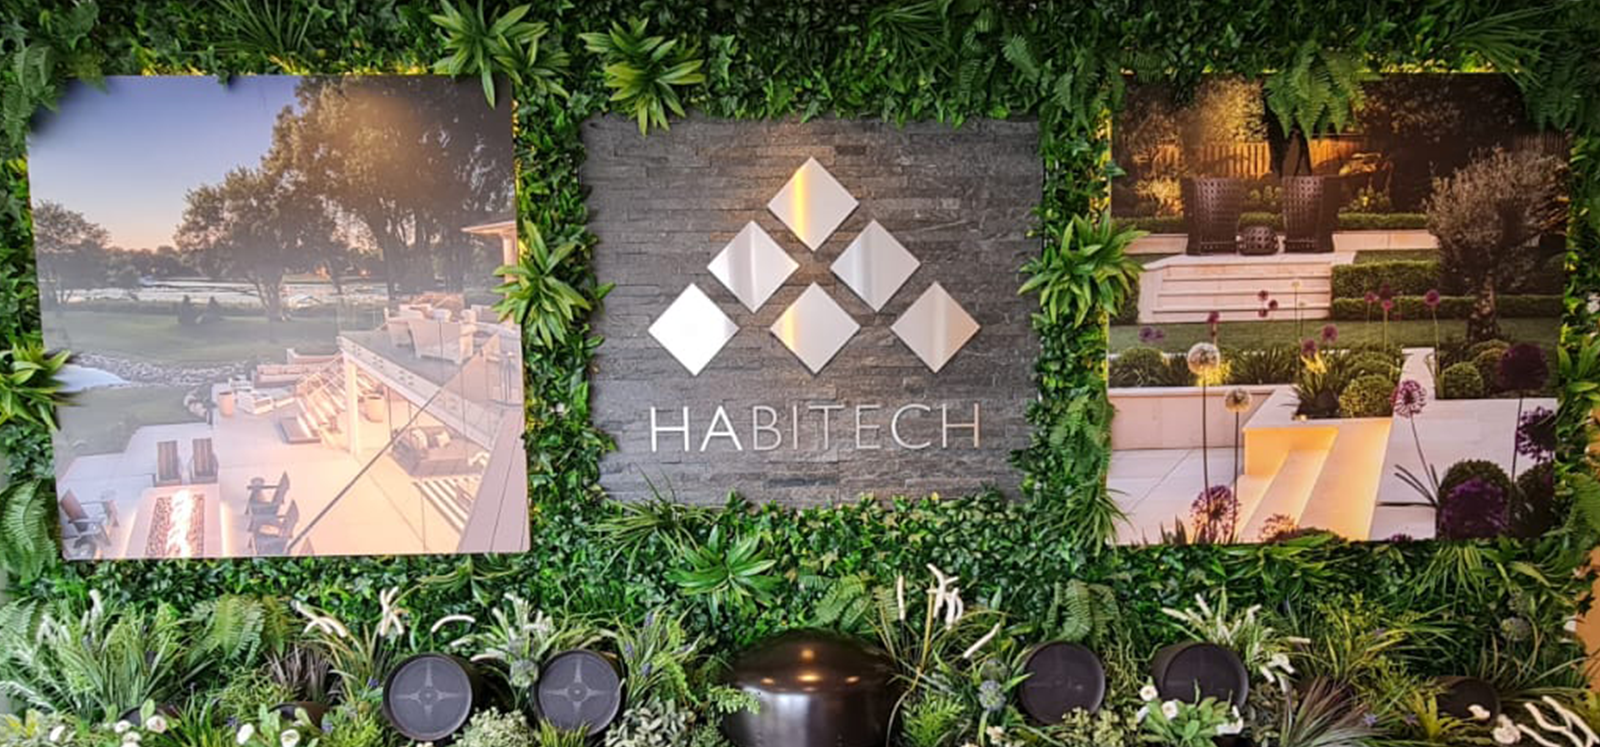 Habitech Sign